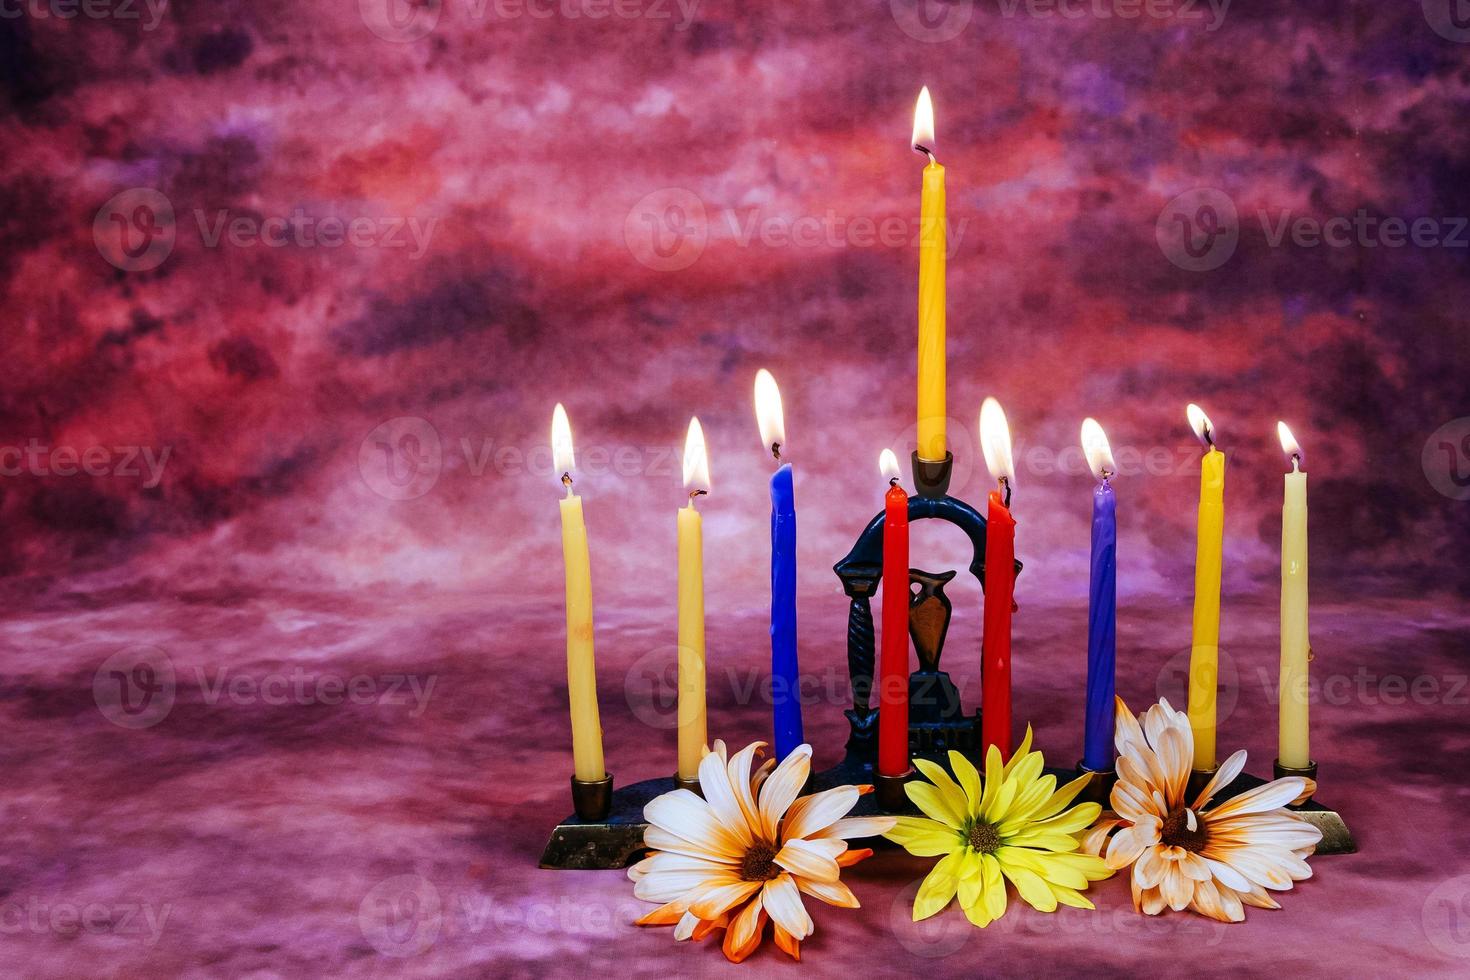 Hanukkah menorah with candles happy burning photo